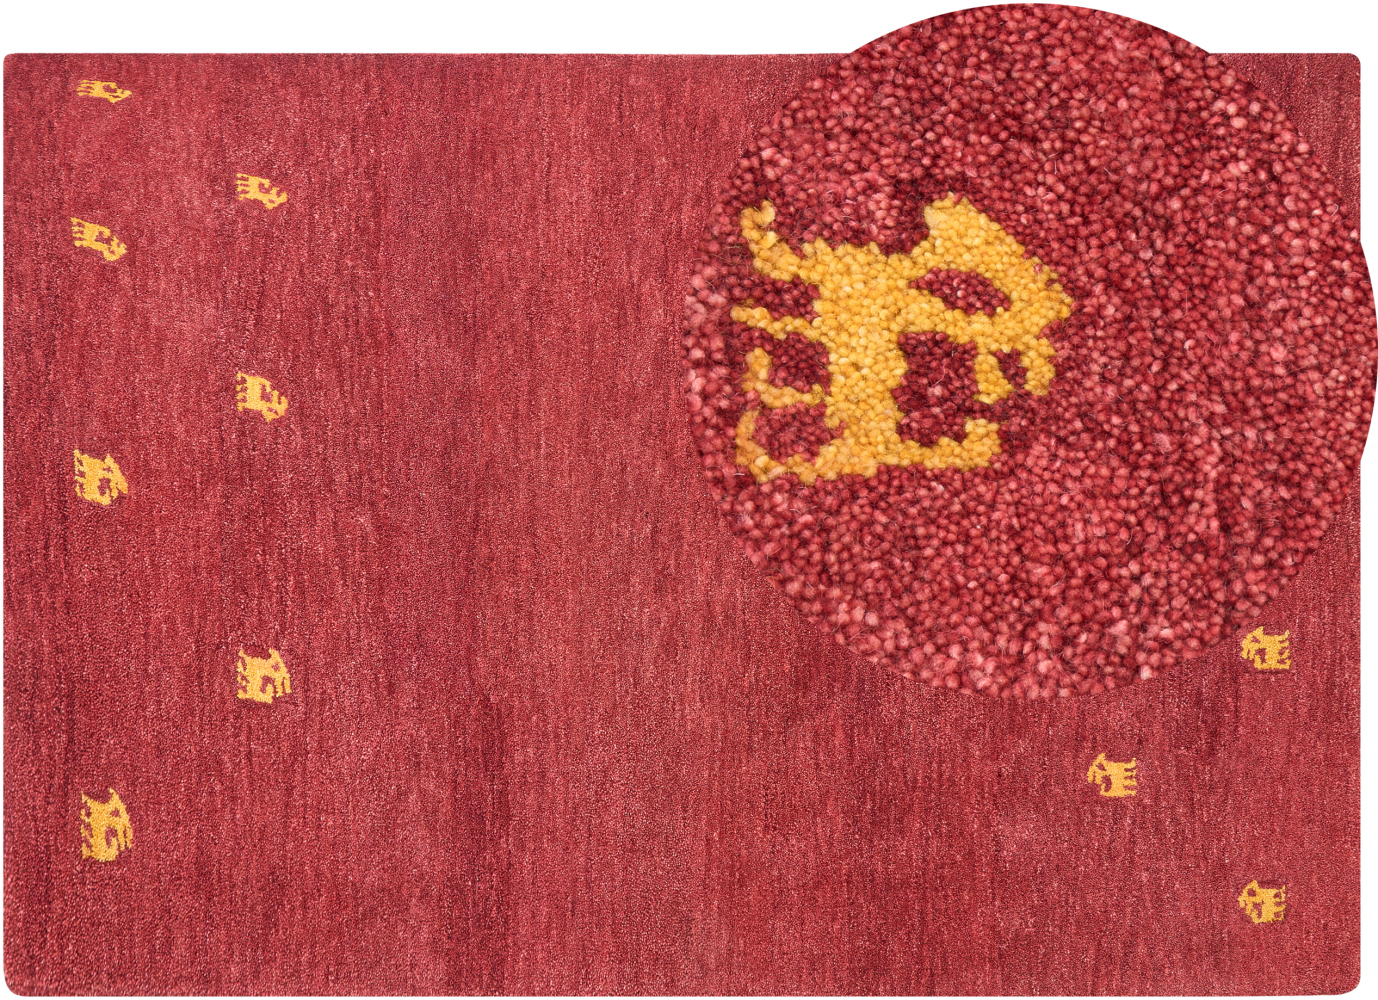 Gabbeh Teppich Wolle rot 160 x 230 cm abstraktes Muster Hochflor YARALI Bild 1